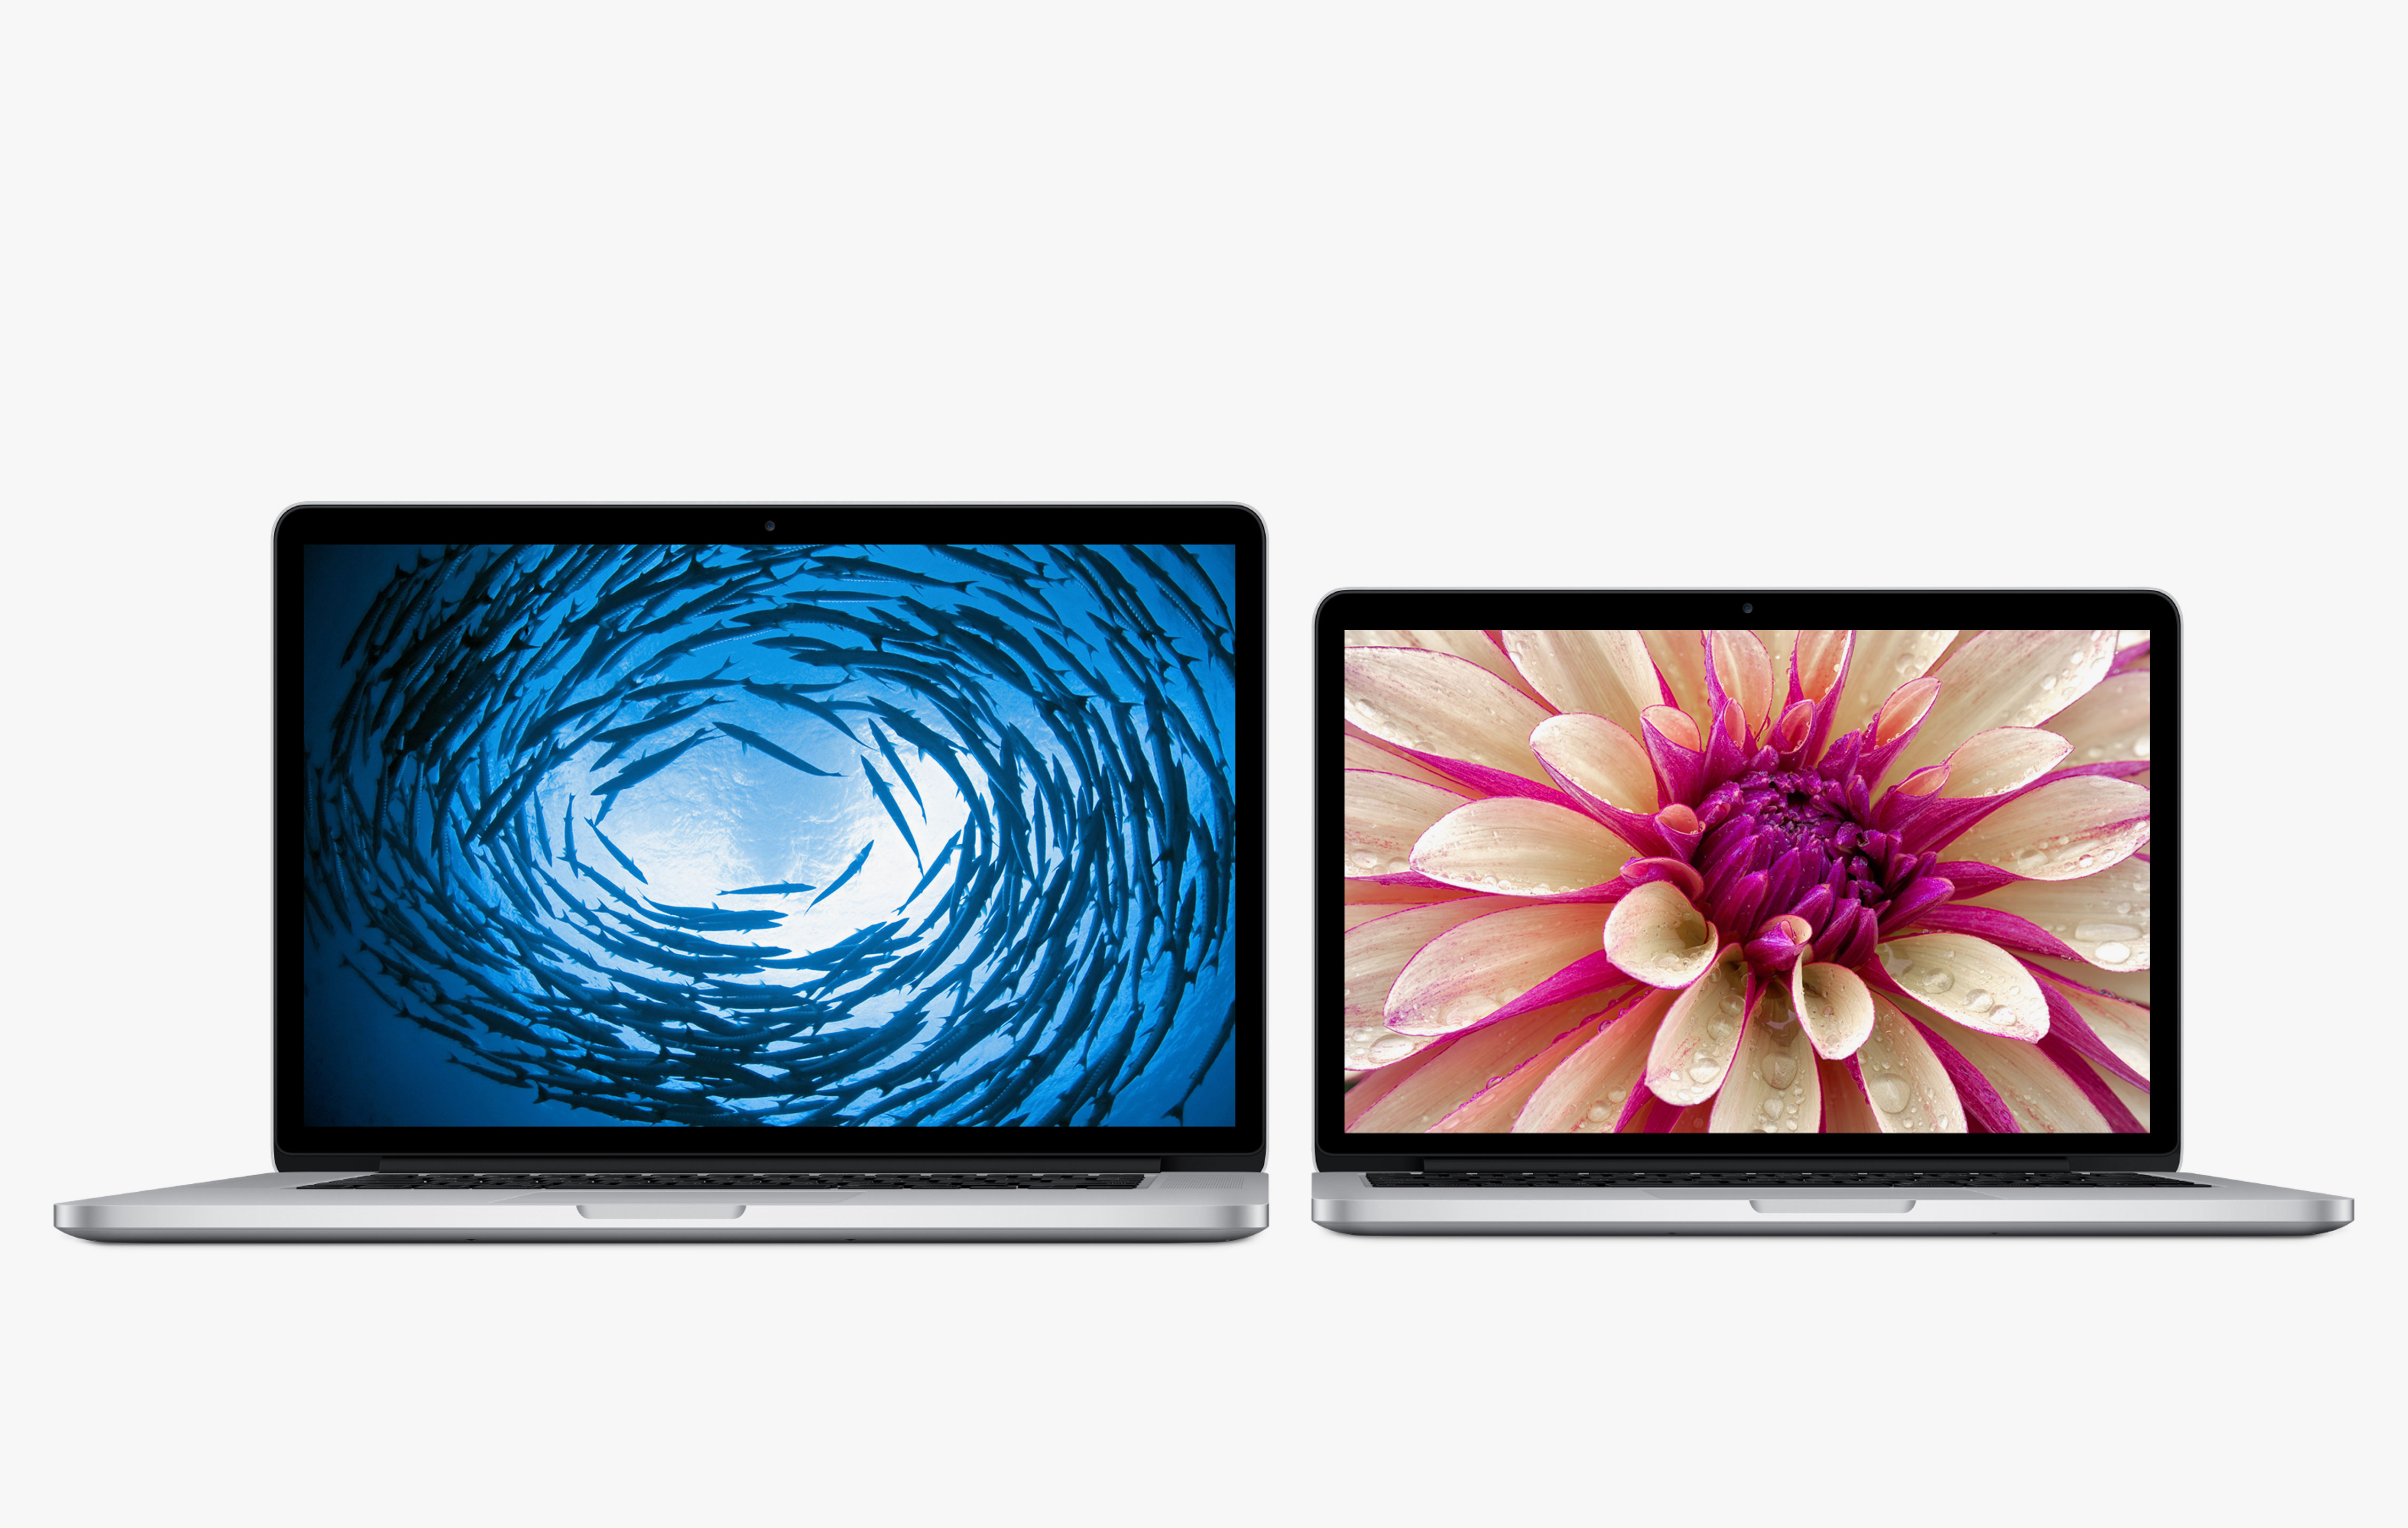 MacBook Pro Retina 5K could happen